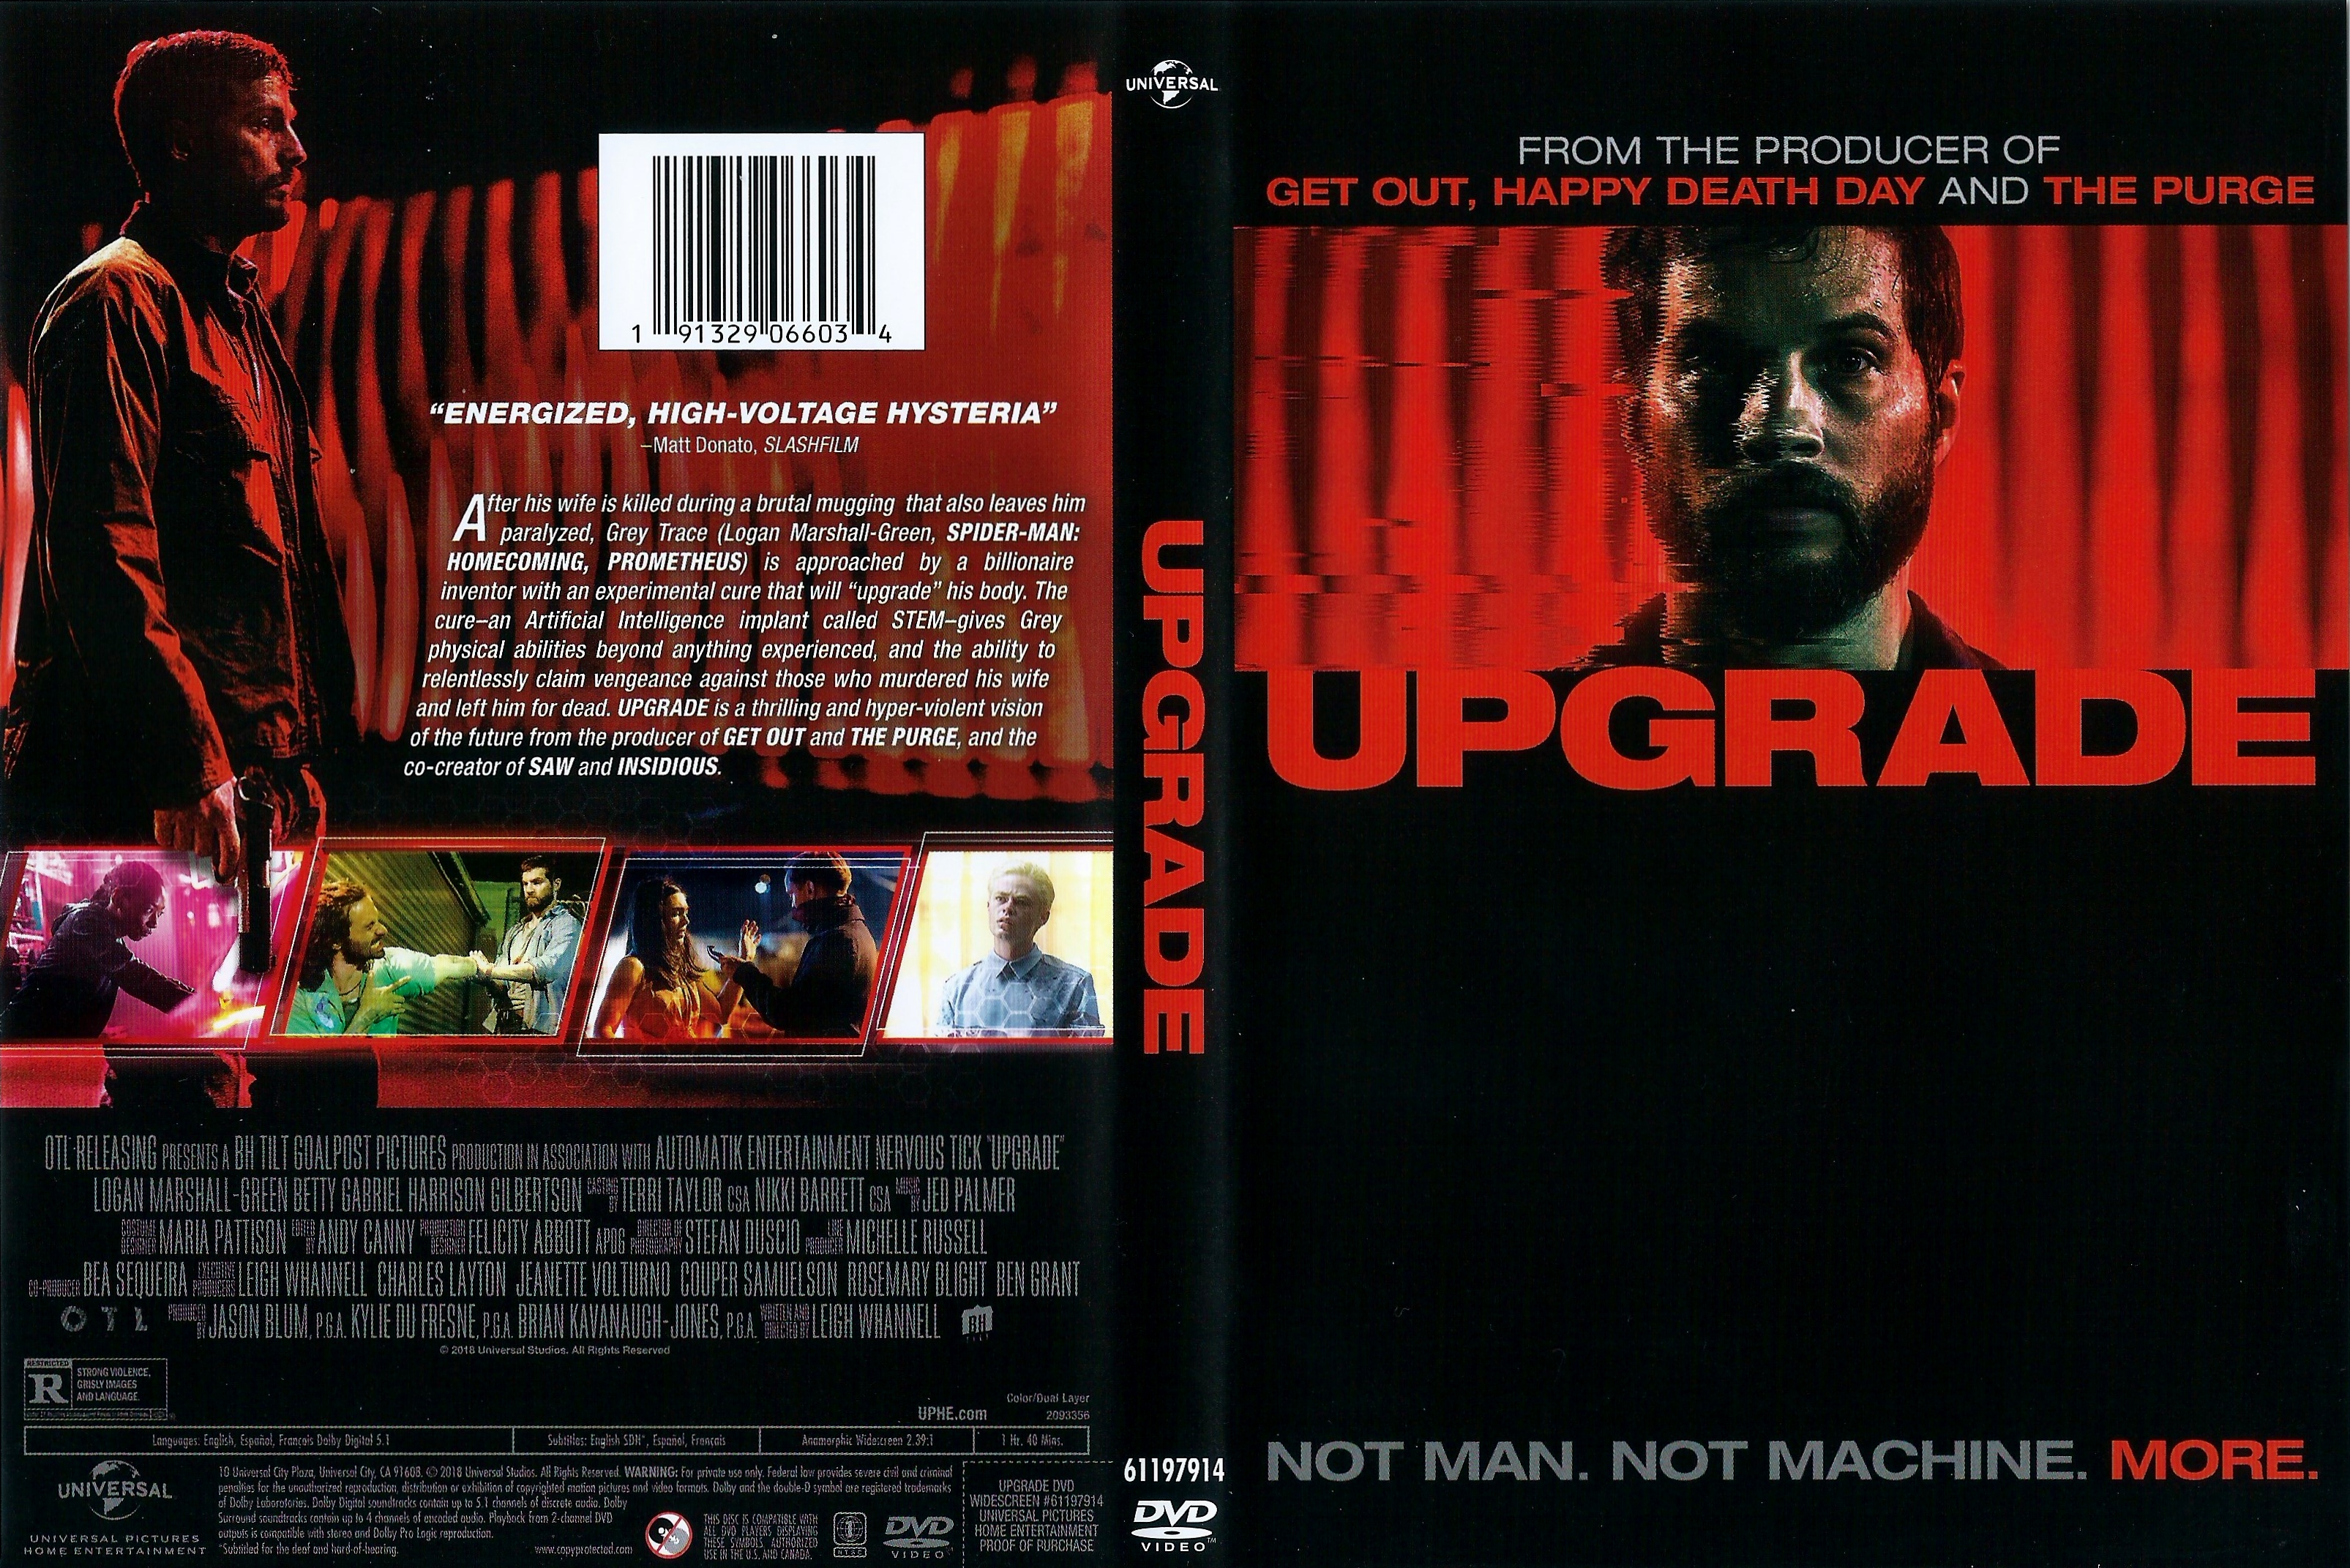 Upgrade (DVD) [2018]